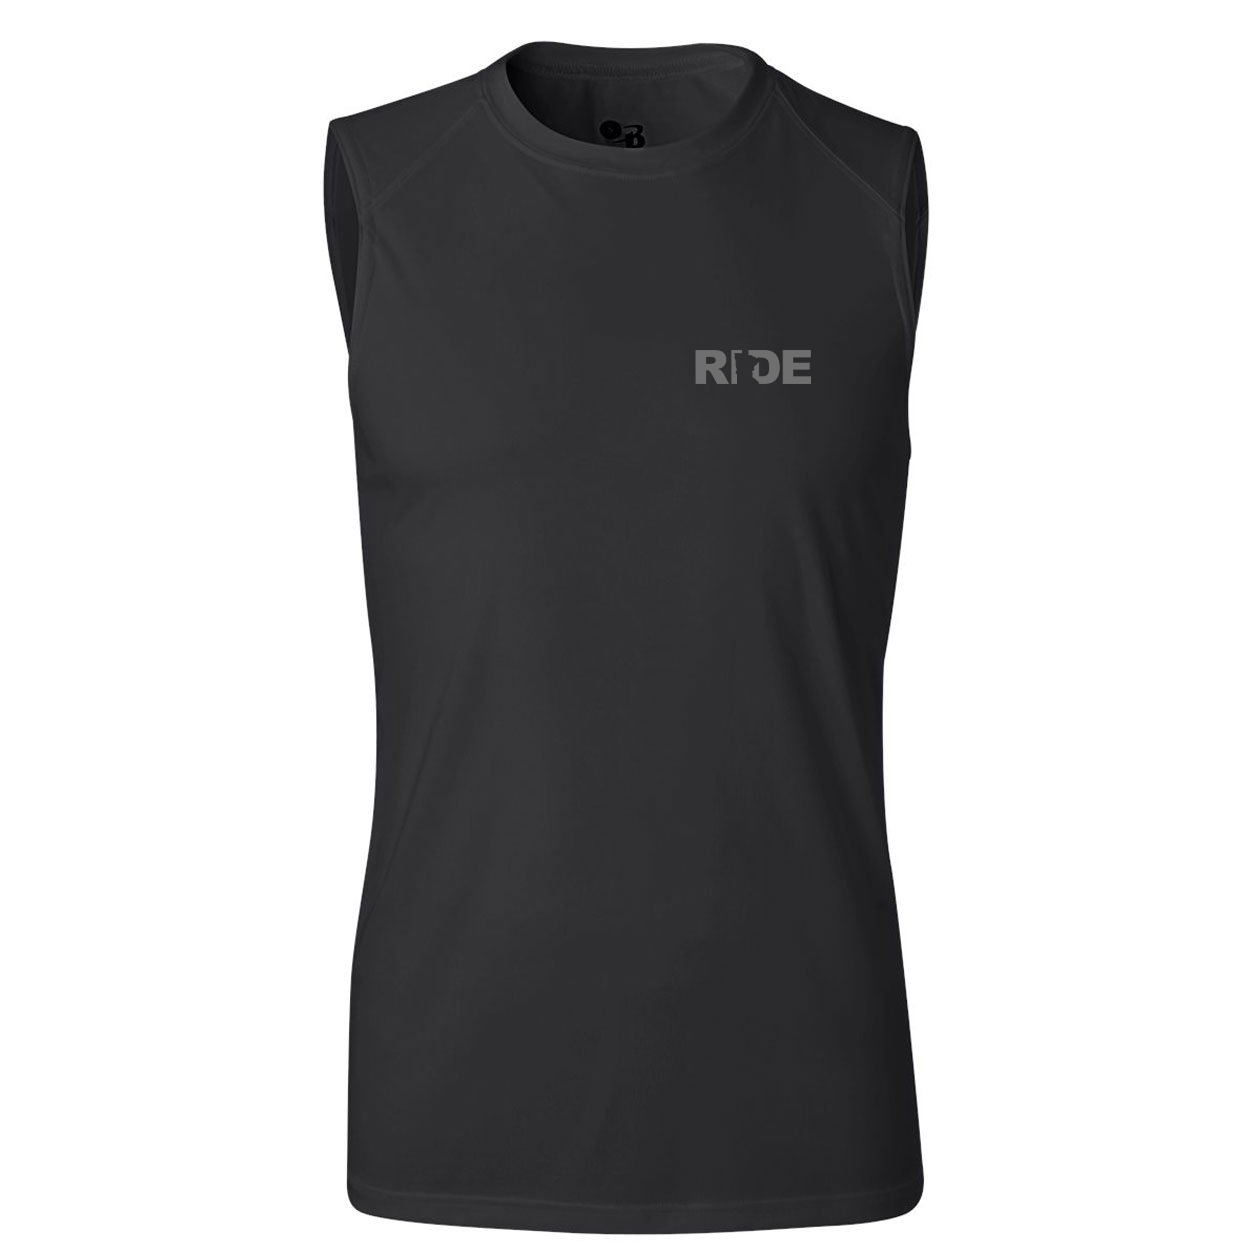 Ride Minnesota Night Out Unisex Performance Sleeveless T-Shirt Black (Gray Logo)